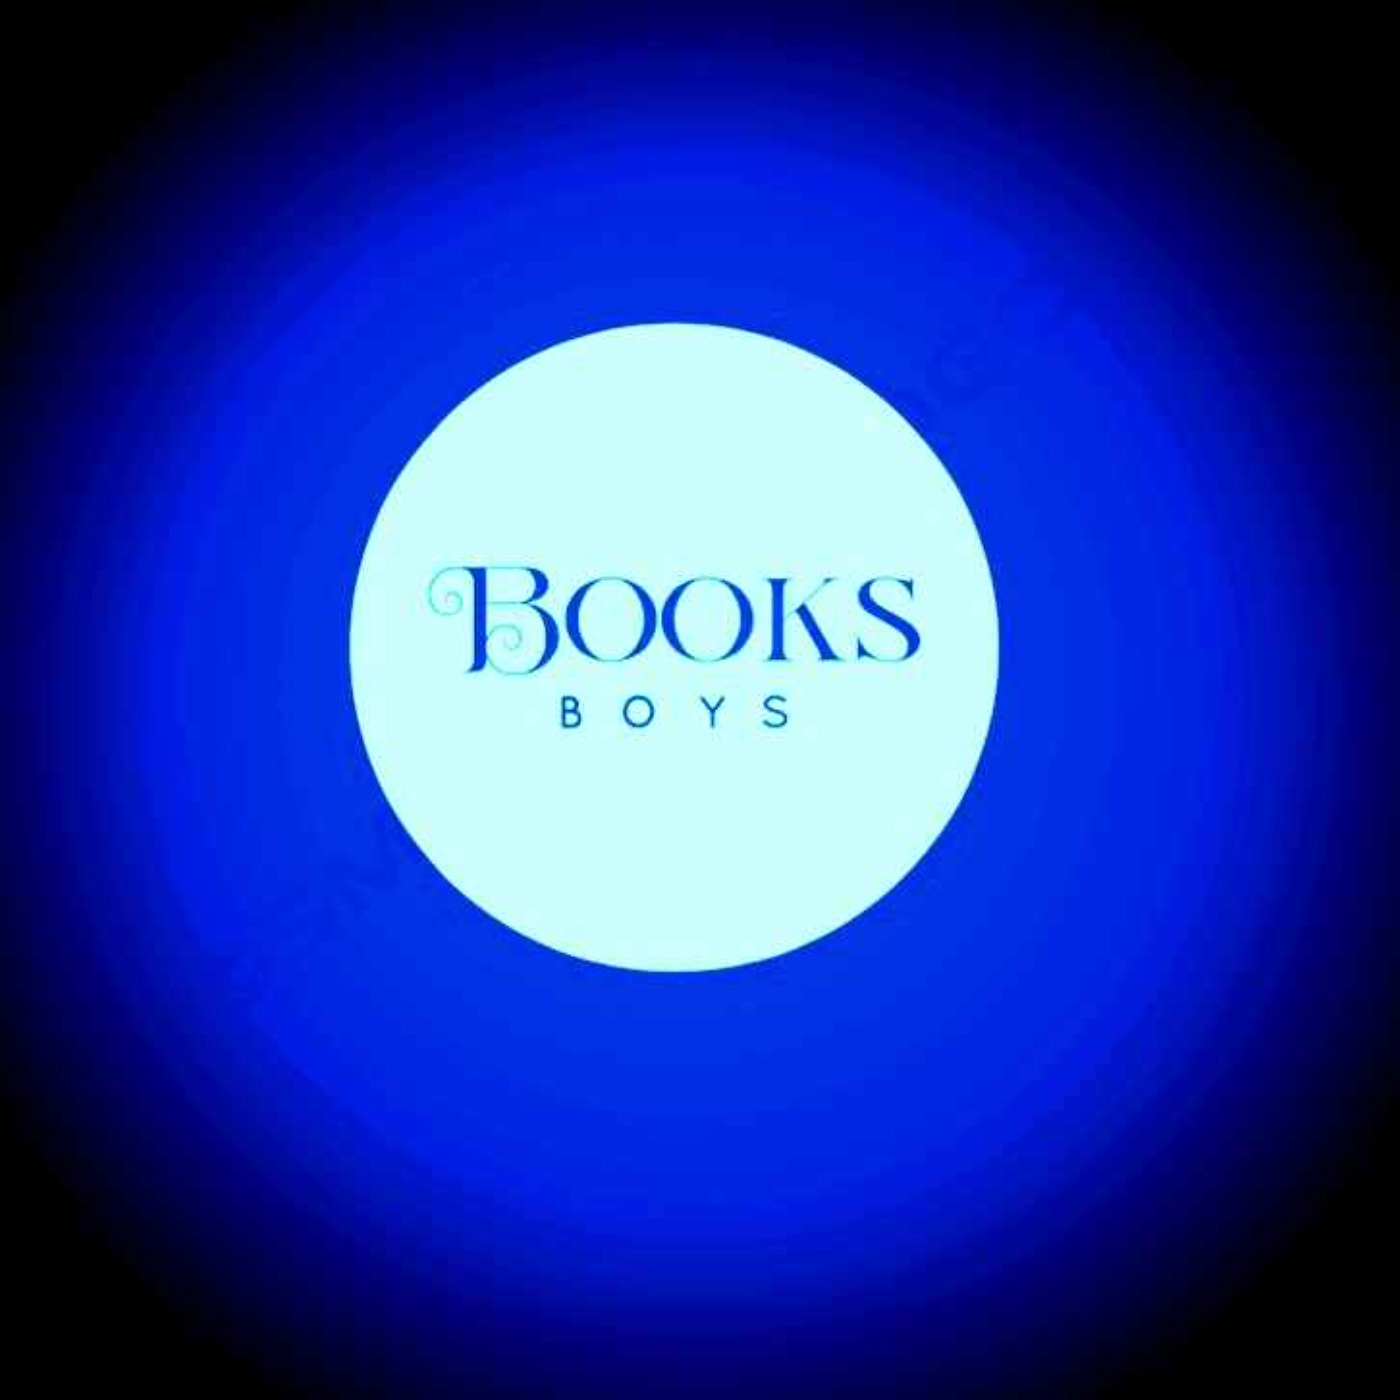 Books Boys Bonus: Thomas R. Weaver